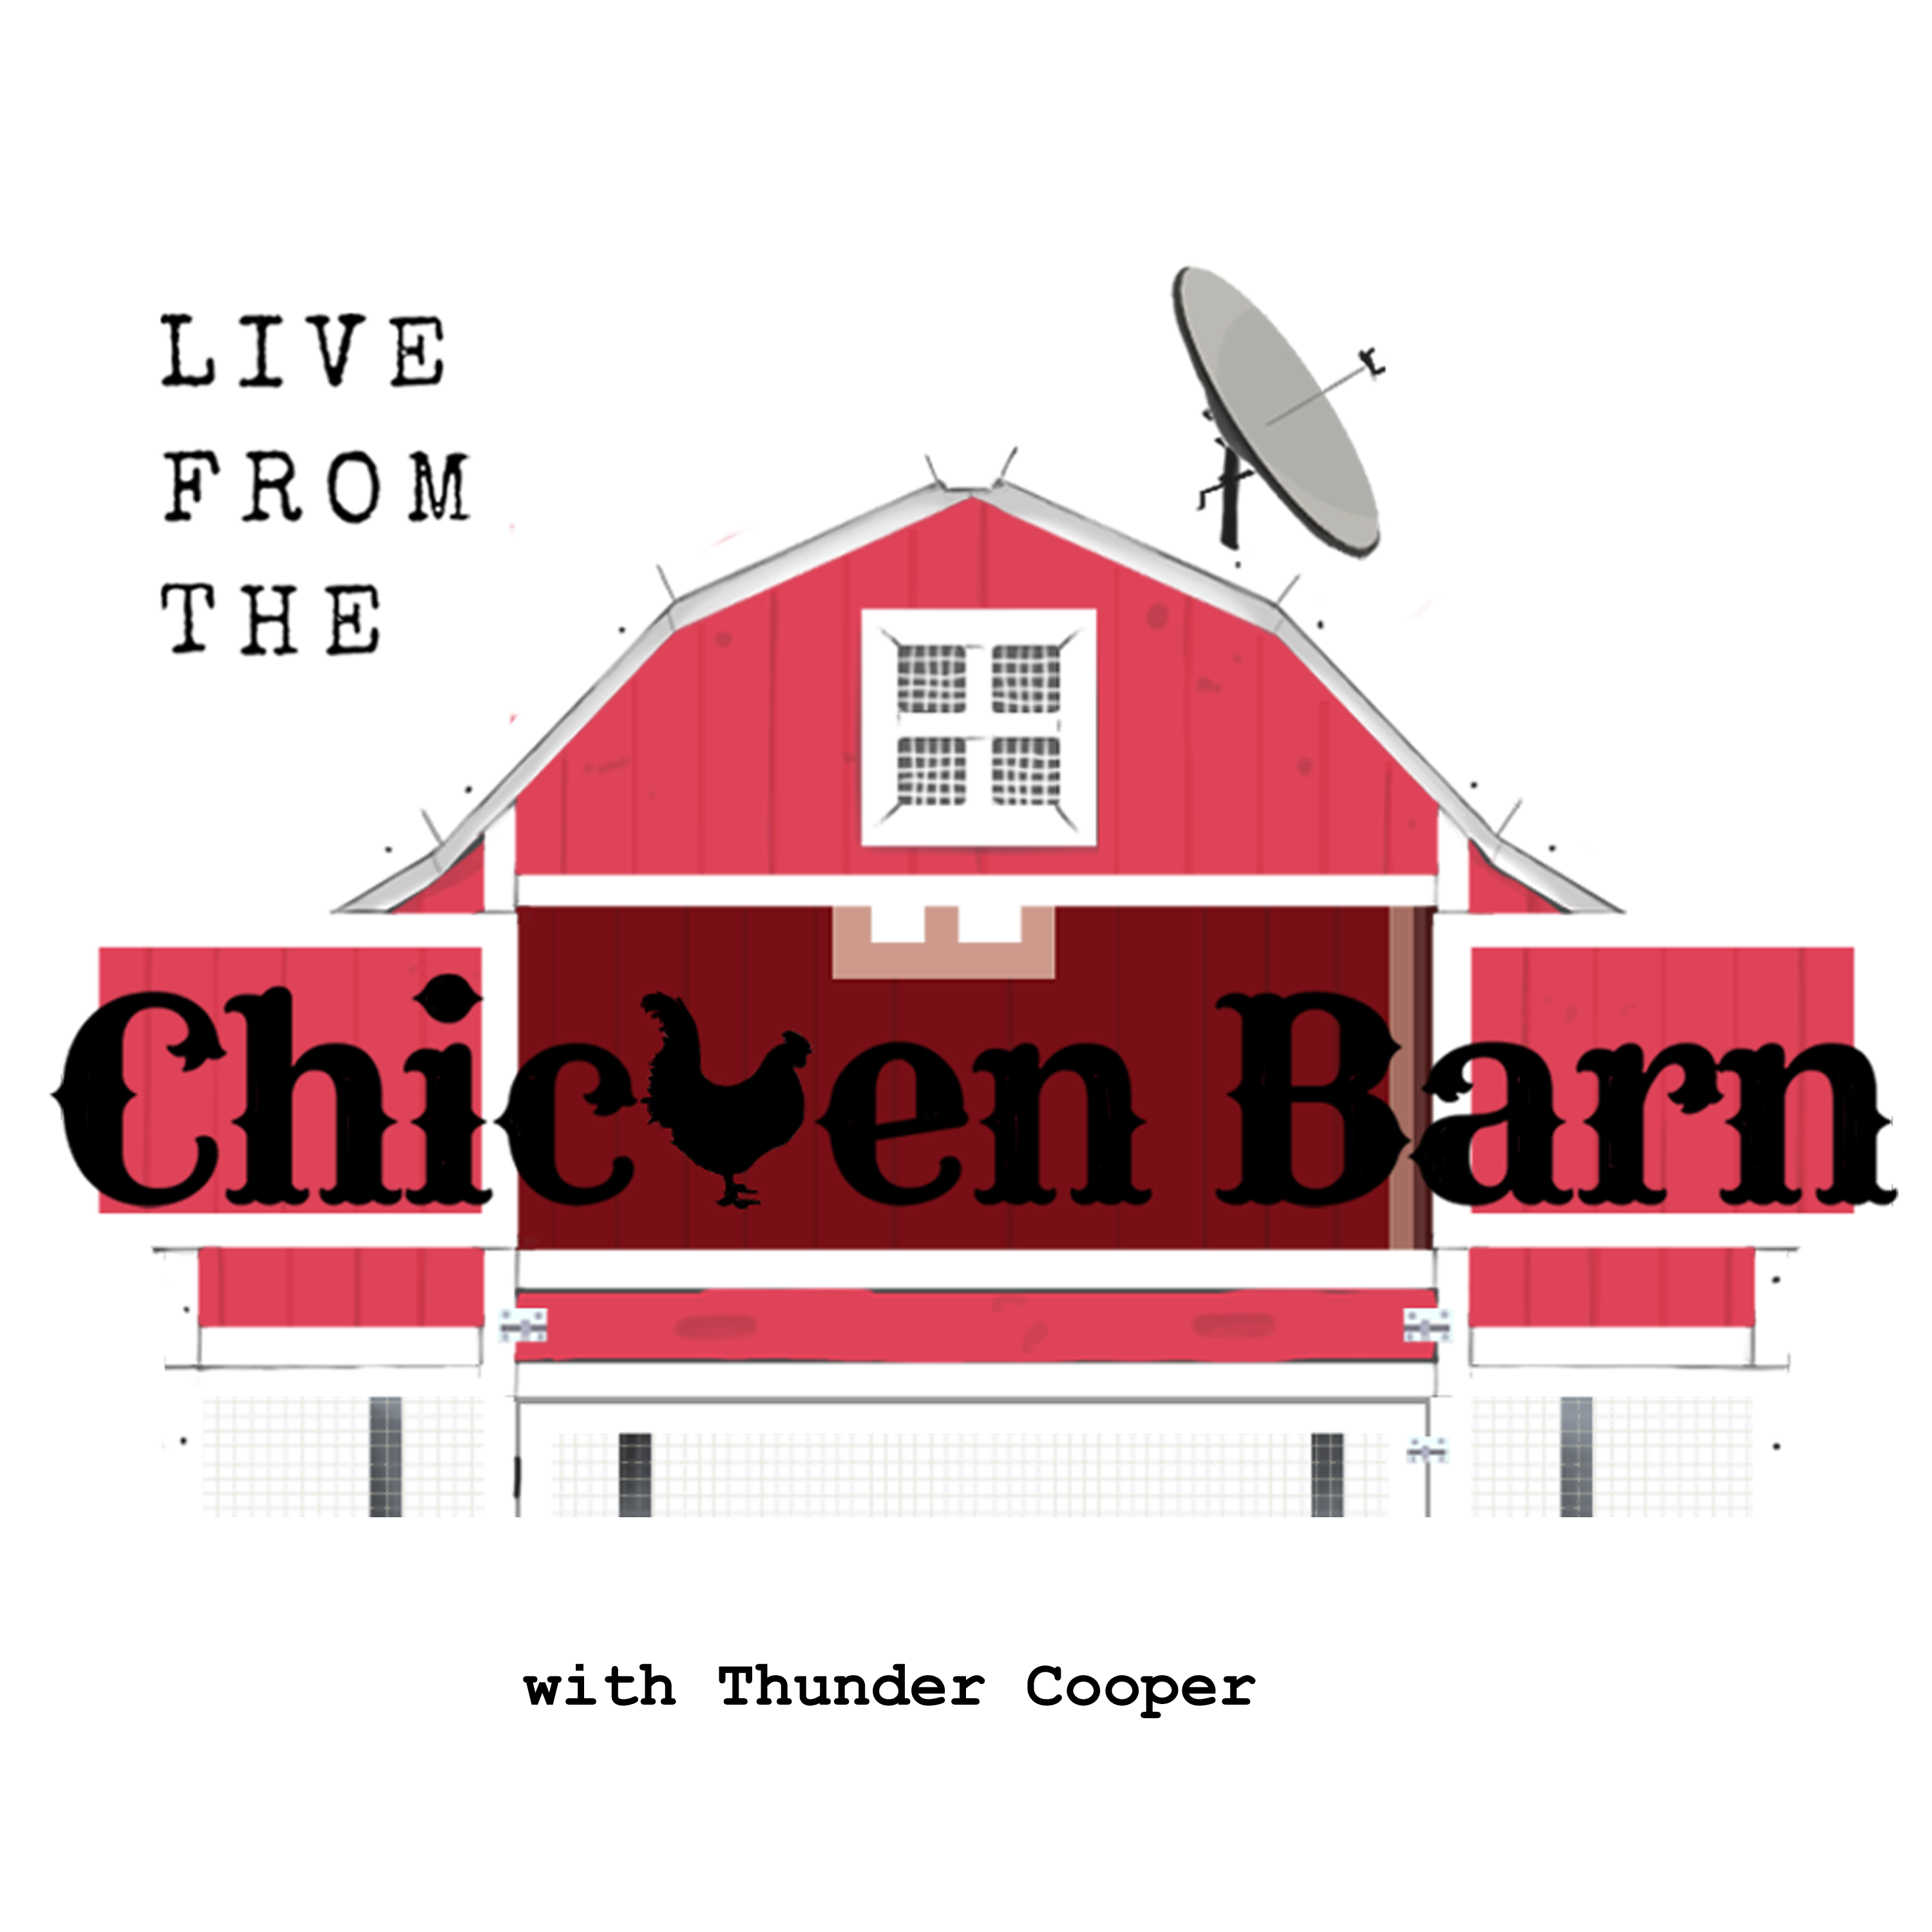 The Chicken Barn